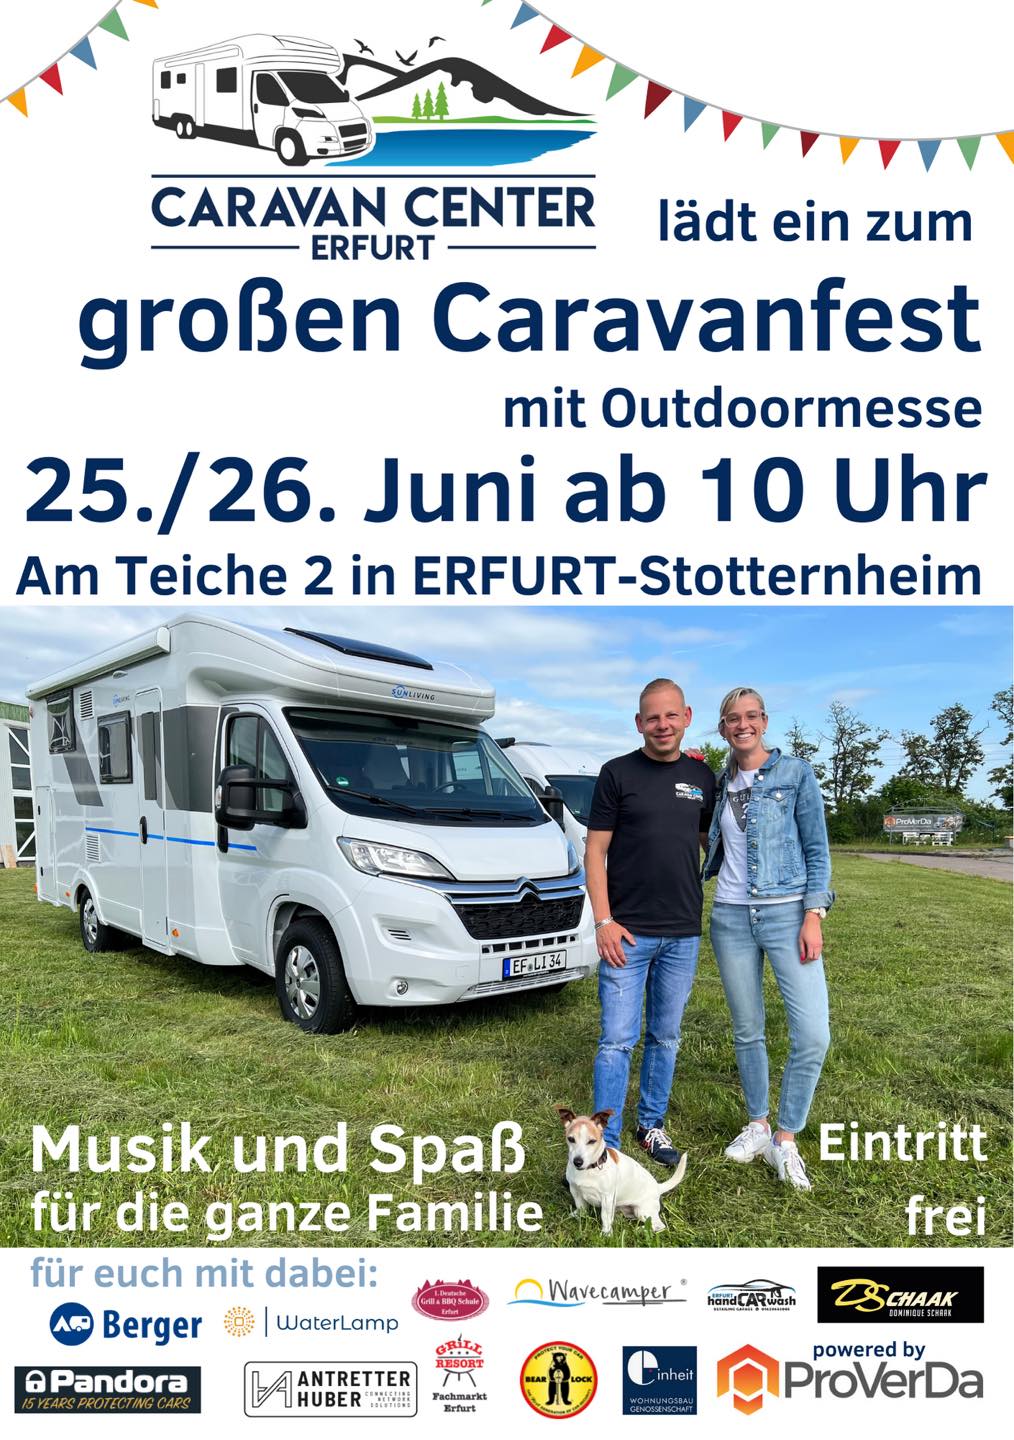 Caravanfest mit Outdoormesse - Caravan Center Erfurt